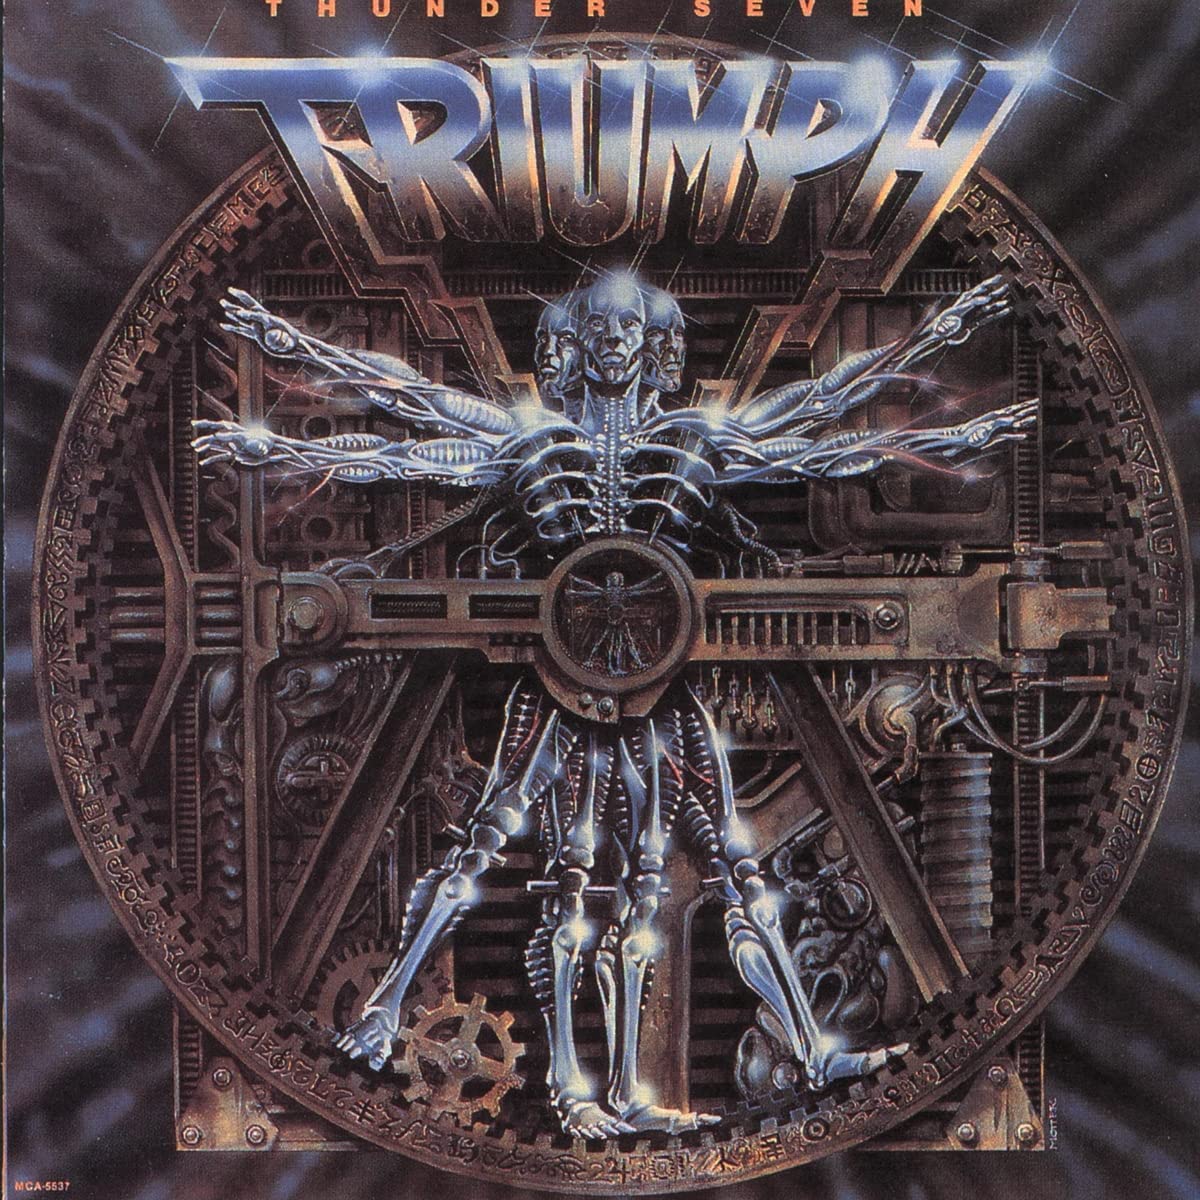 CD - Triumph - Thunder Seven